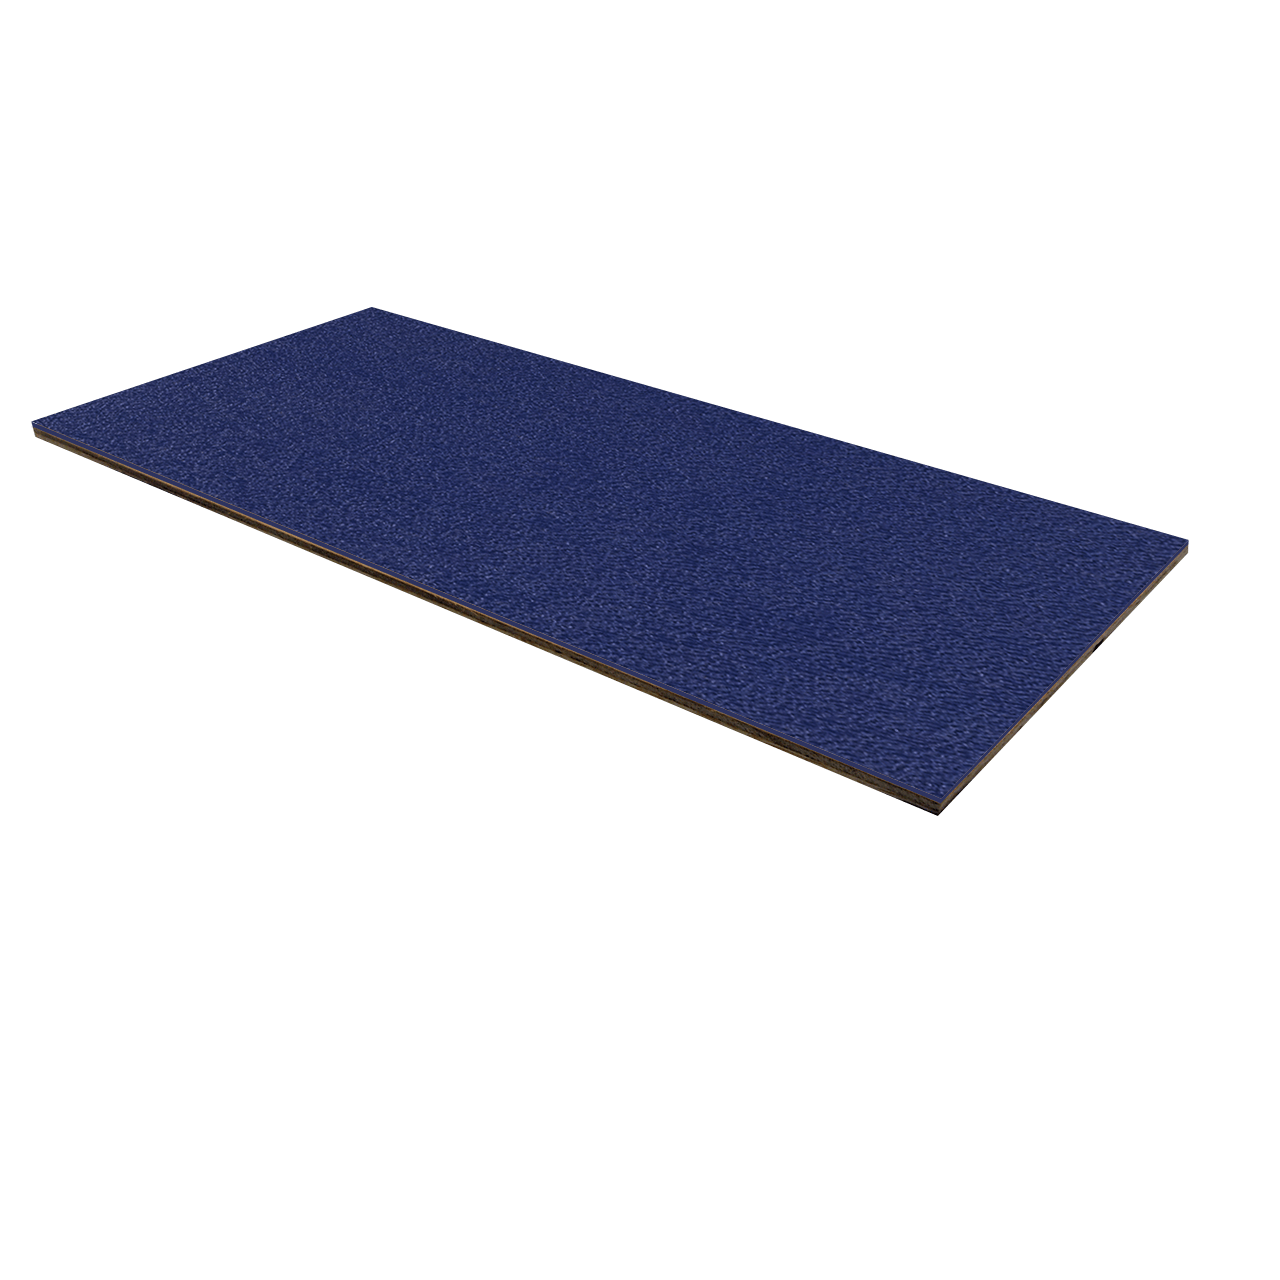 1/8" Luan Plywood ABS Laminate - Dark Blue